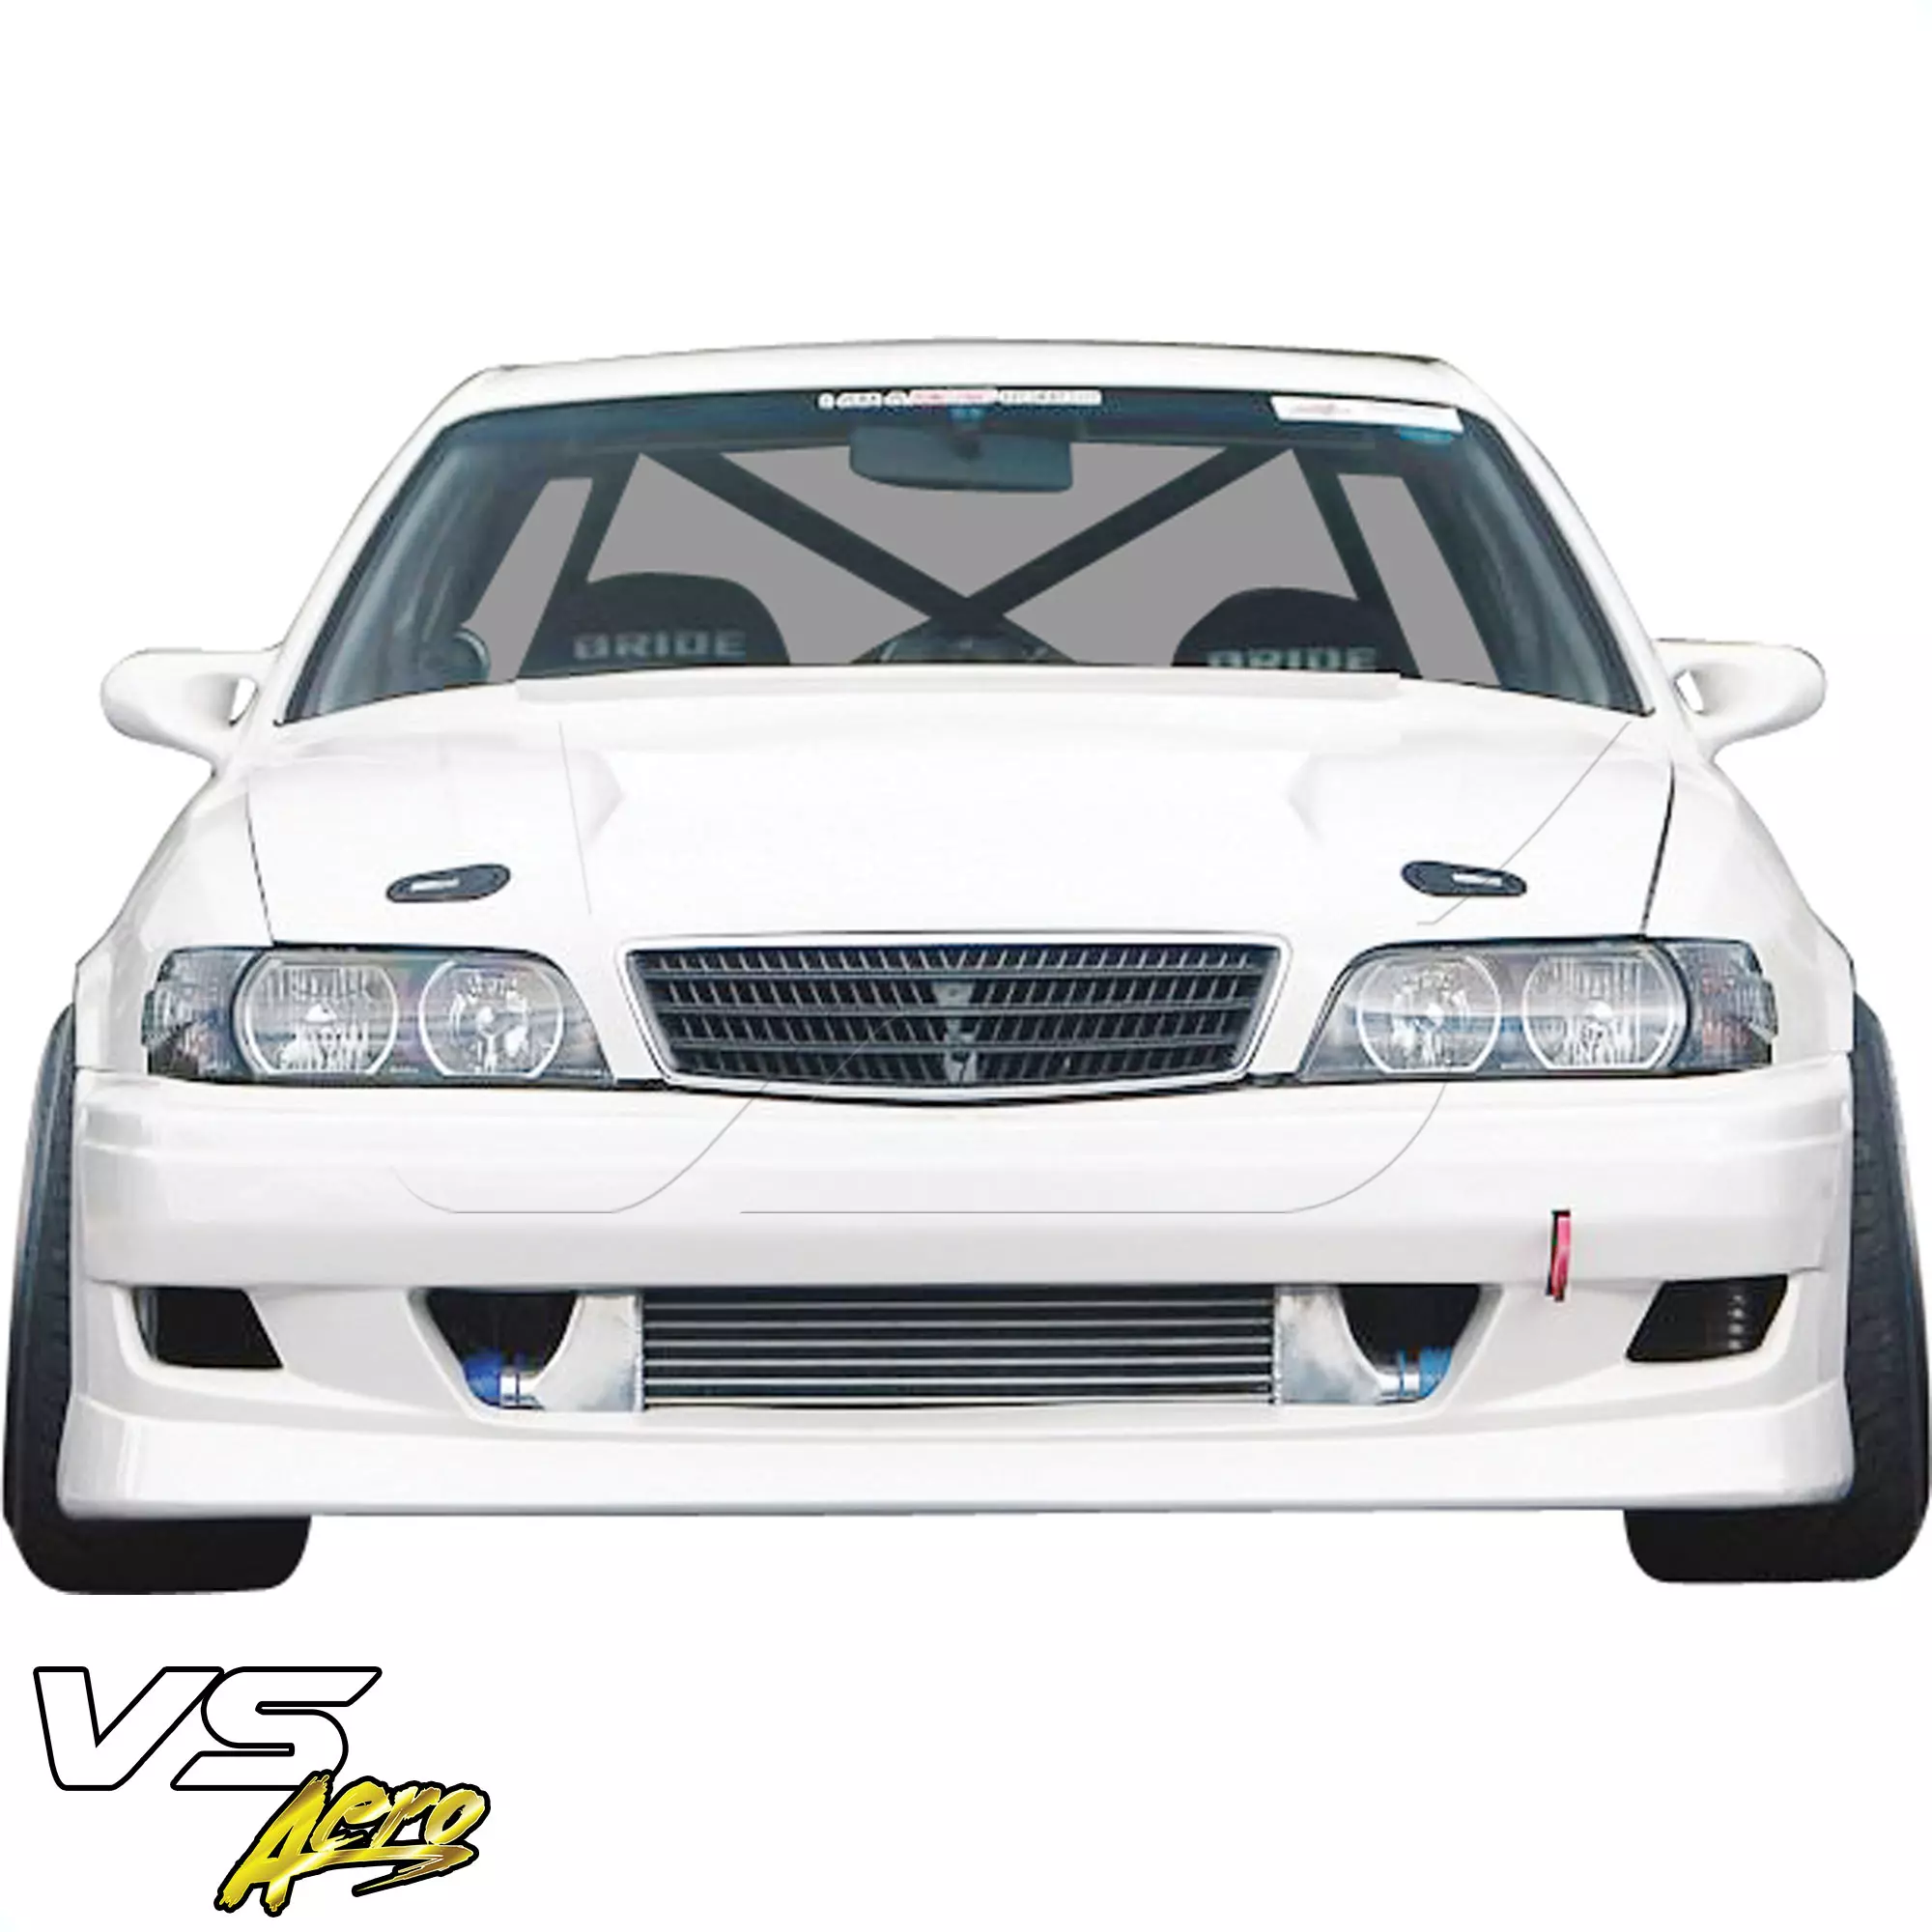 VSaero FRP URA vL Body Kit 4pc > Toyota Chaser JZX100 1996-2000 - Image 19